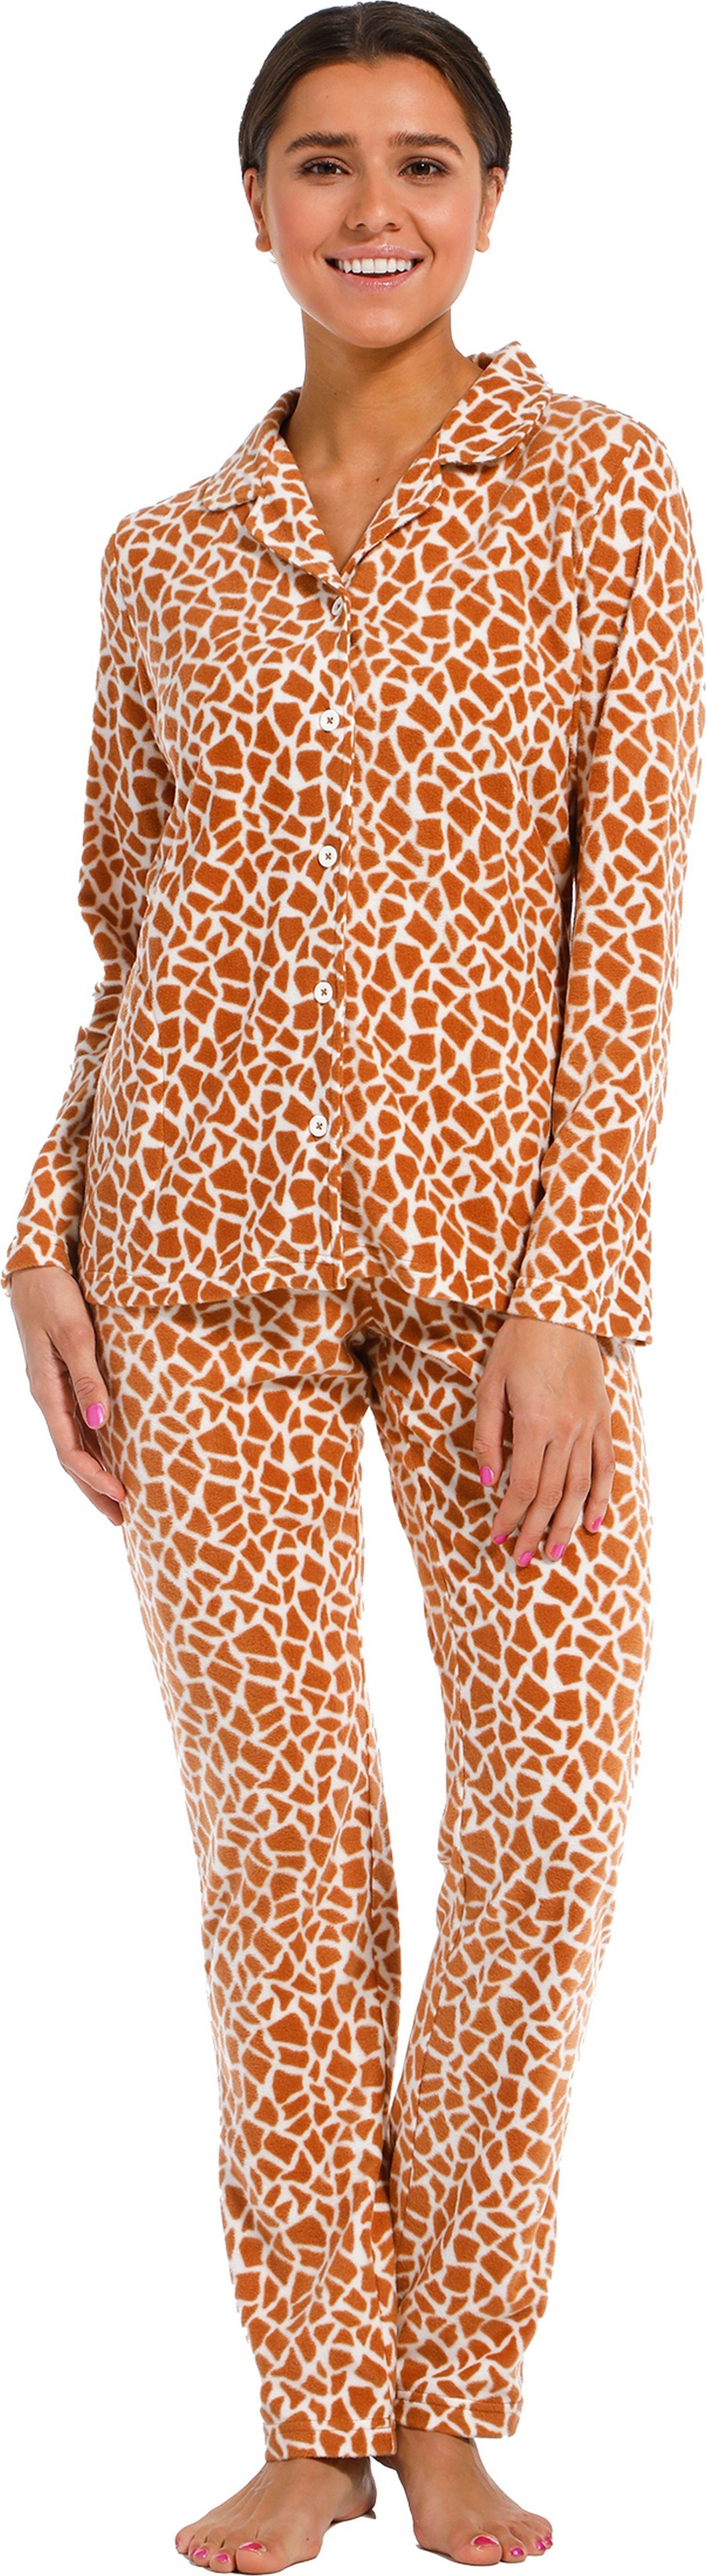 Rebelle Pyjama Damen Fleece Schlafanzug (2 tlg) Kuschelig